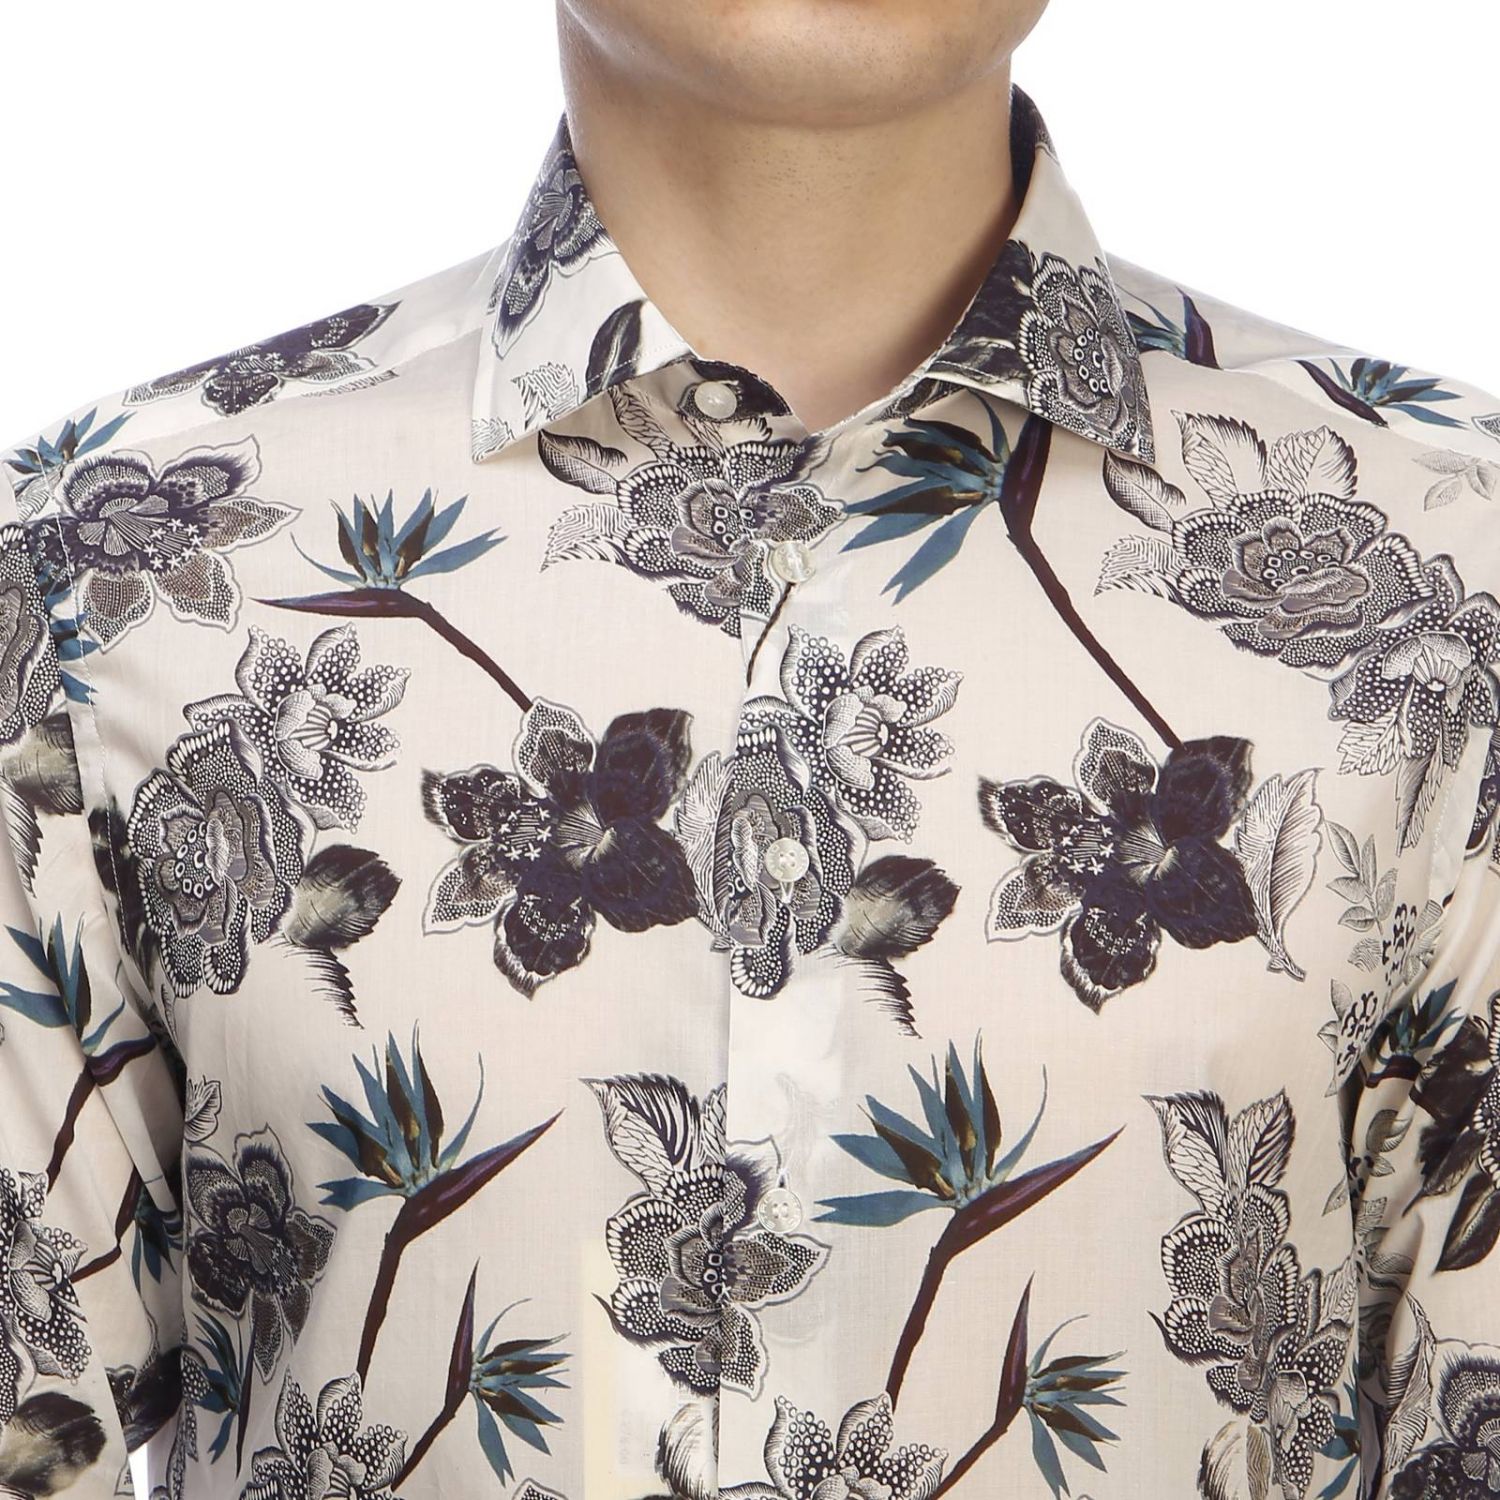 Etro Outlet: shirt for man - White | Etro shirt 11451 4762 online on ...